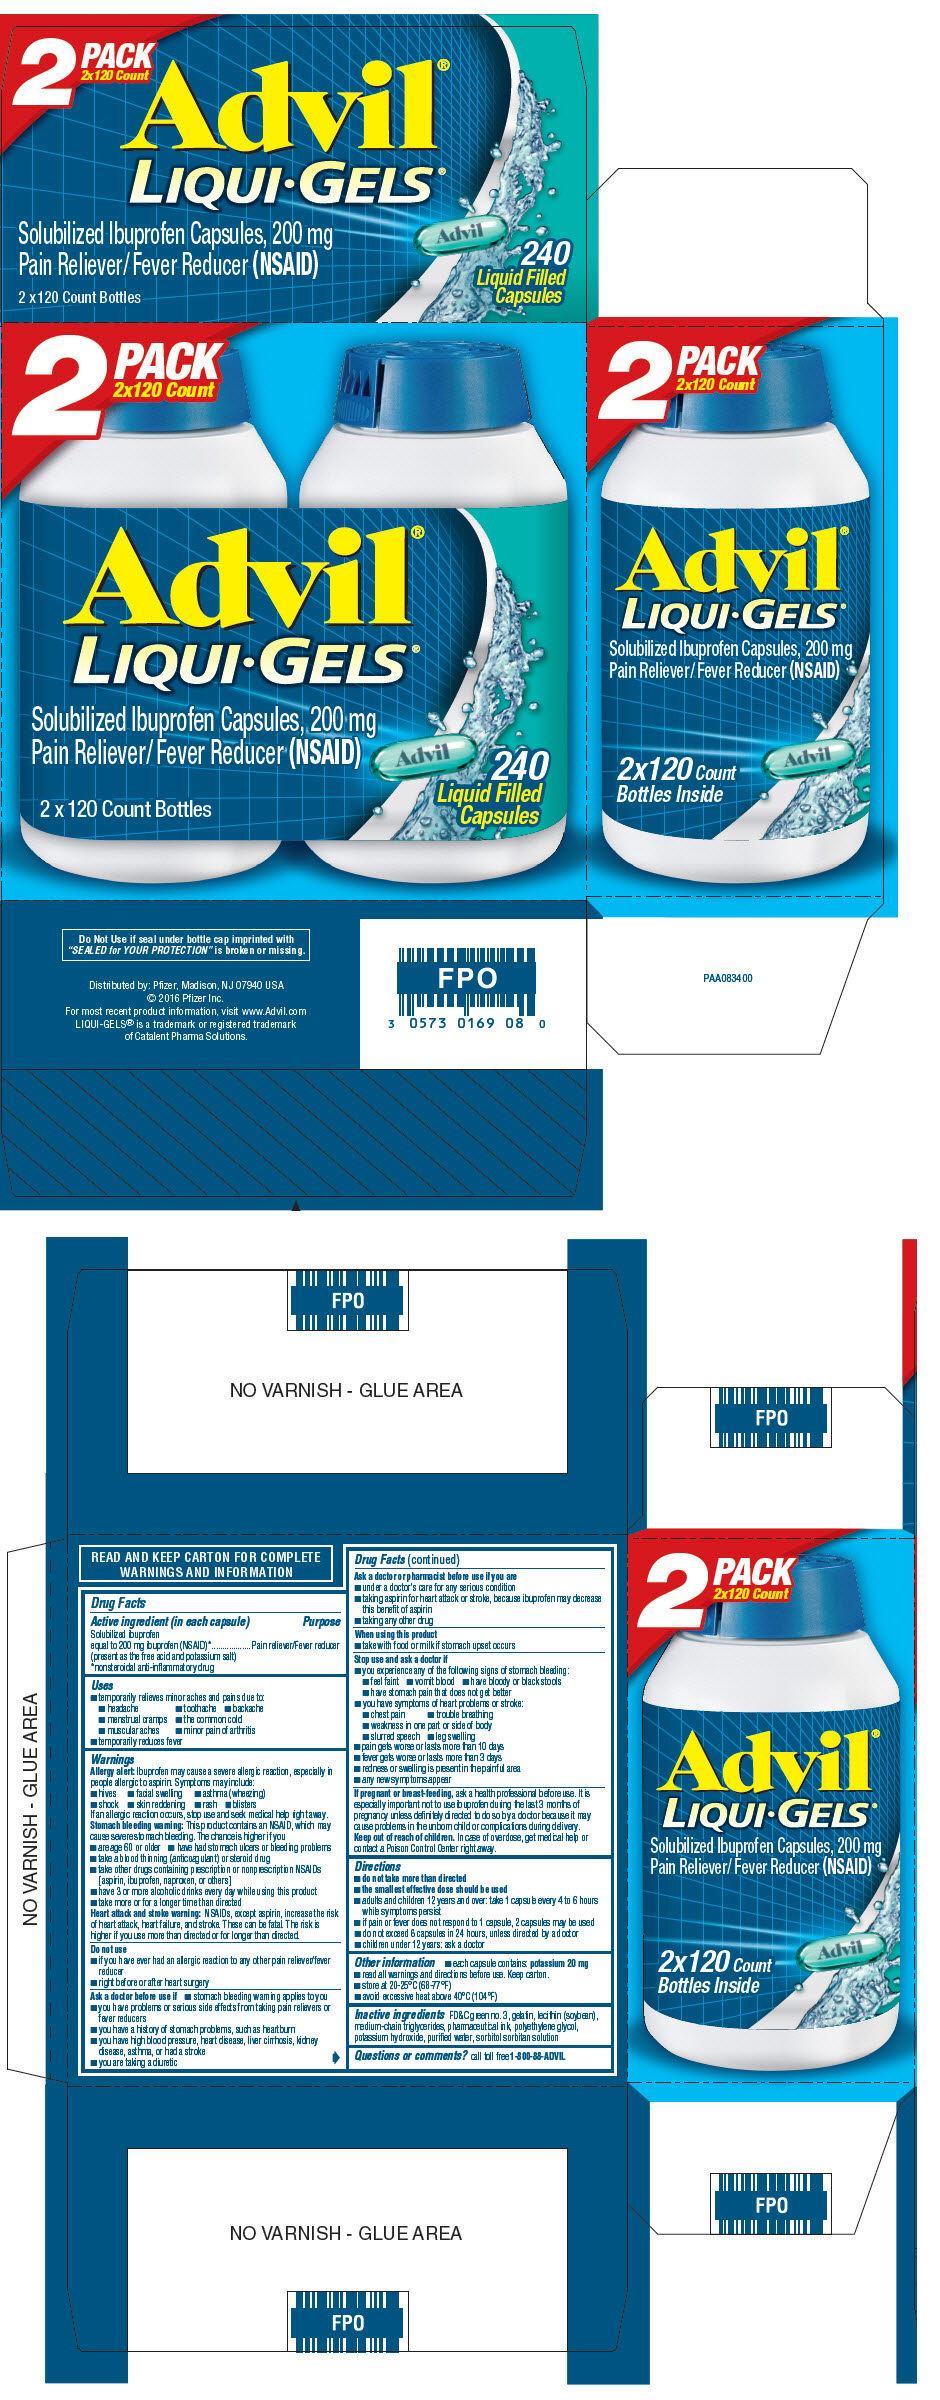 PRINCIPAL DISPLAY PANEL -  2 x 120 Capsule Bottle Carton